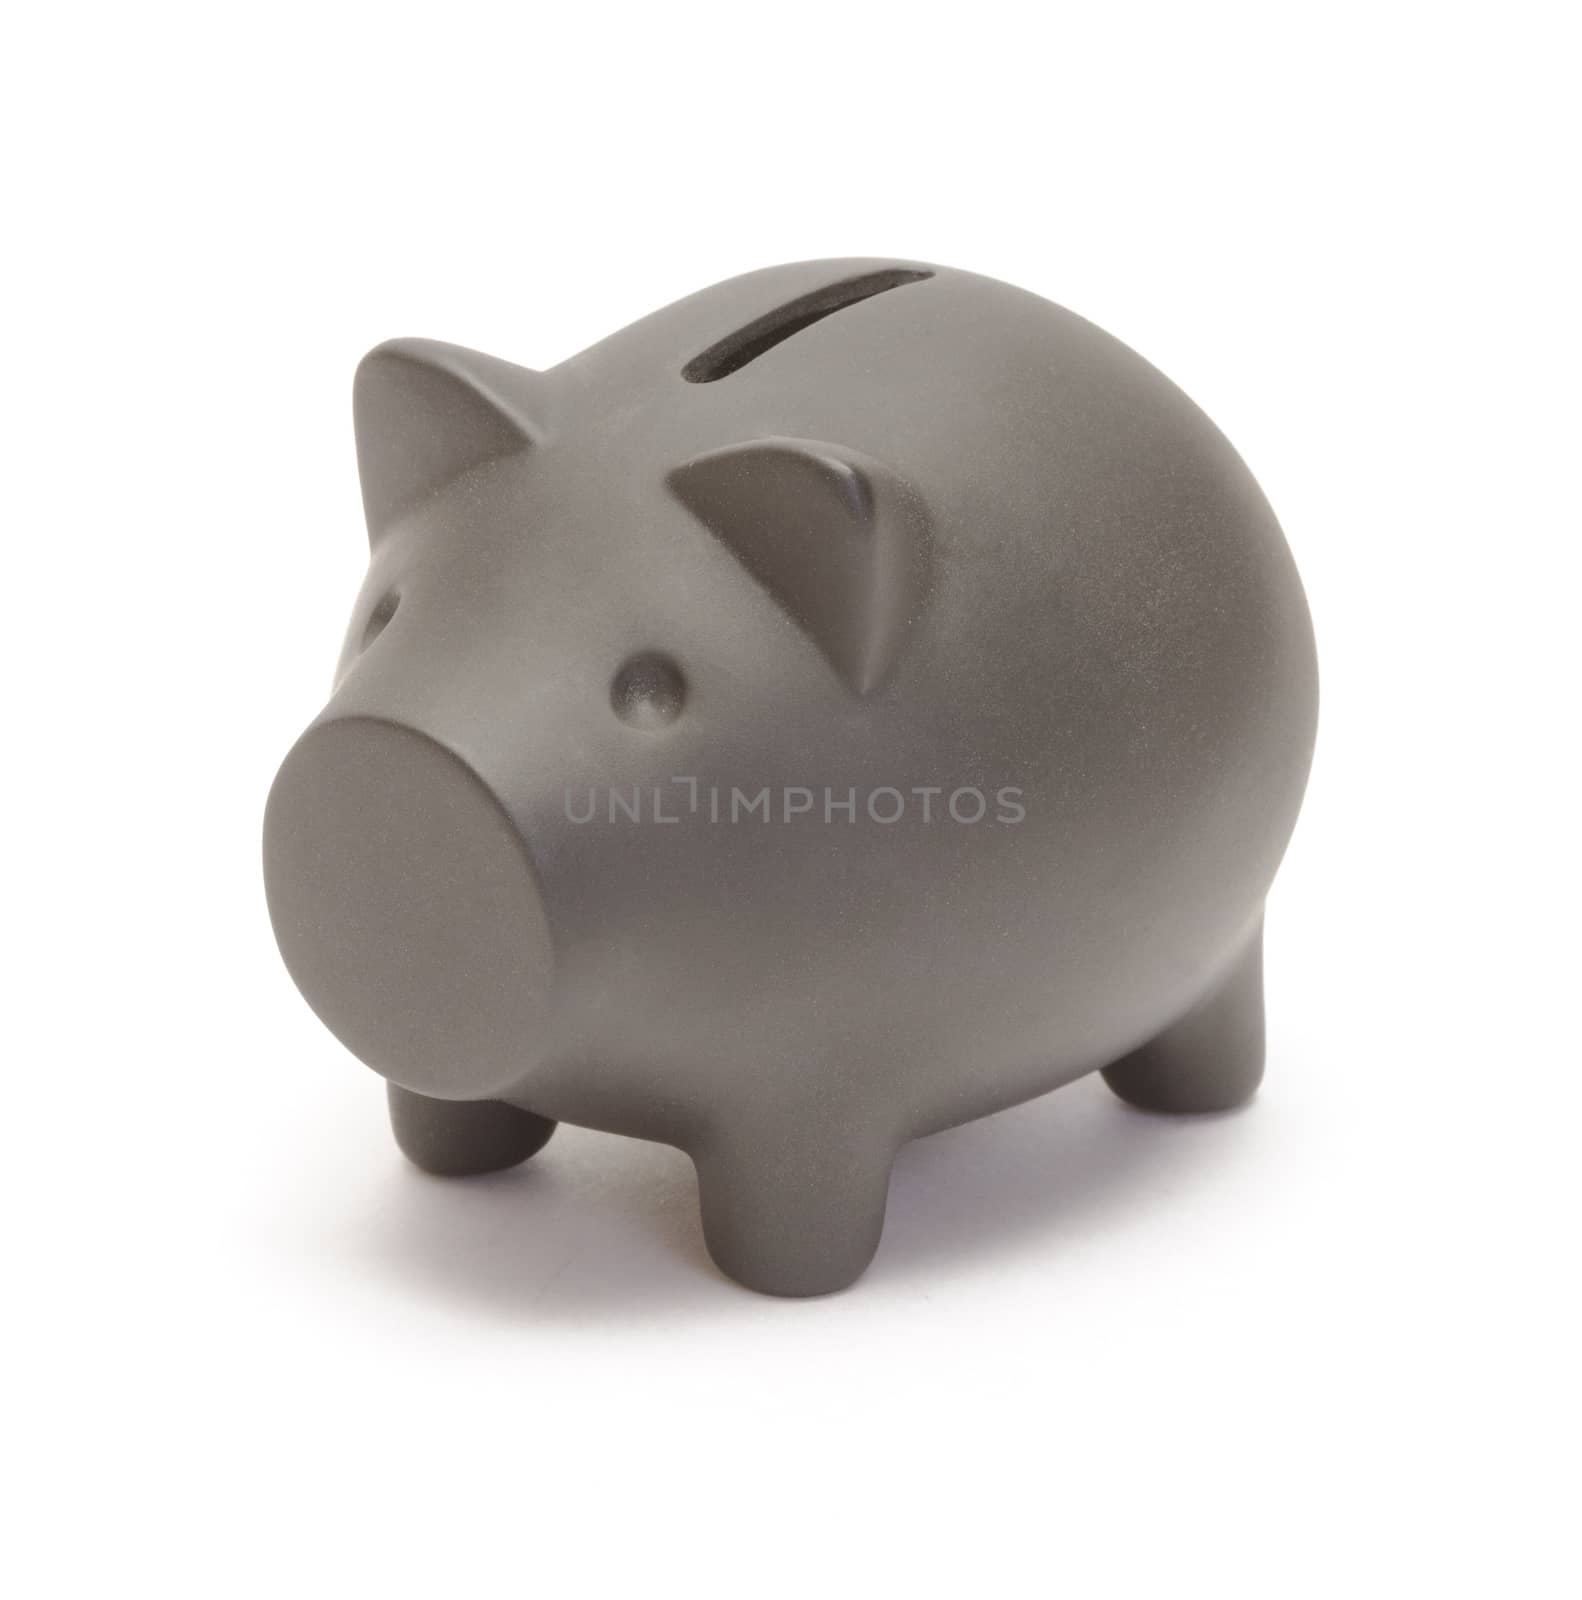 Black piggy bank 
isolated on white